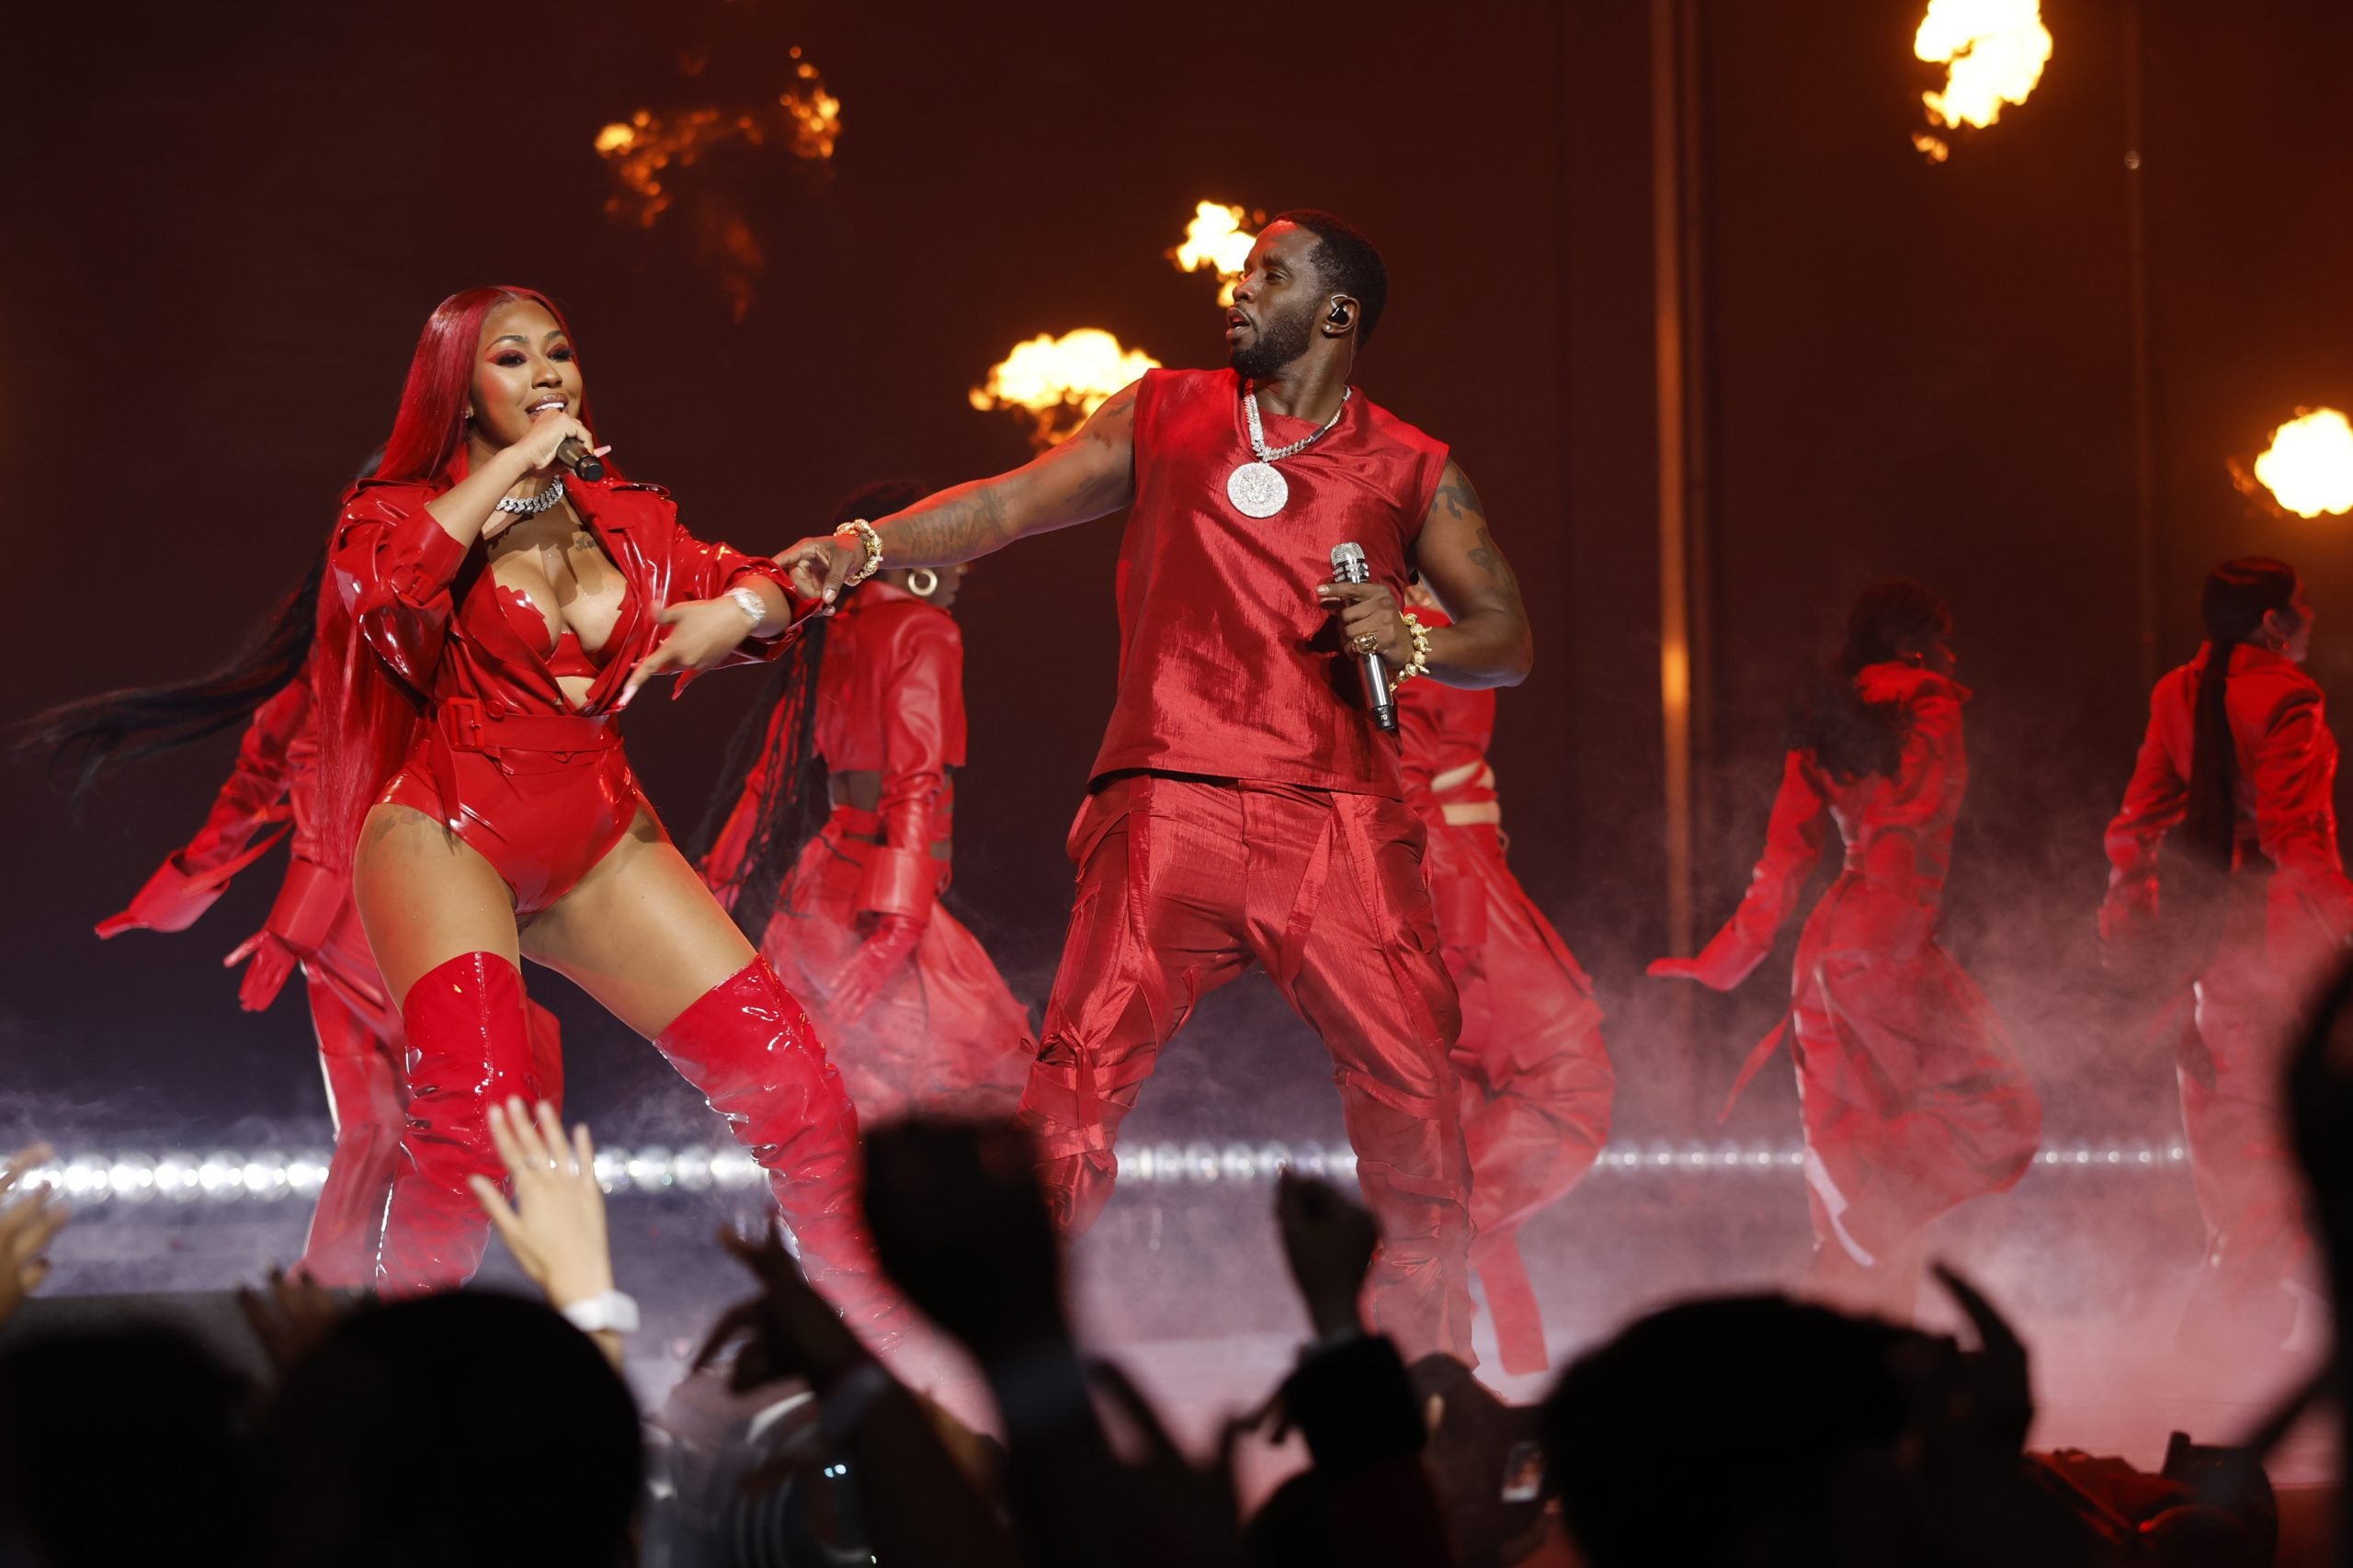 The 2023 MTV VMAs: Nicki Minaj, Ice Spice, SZA Among List Of Winners